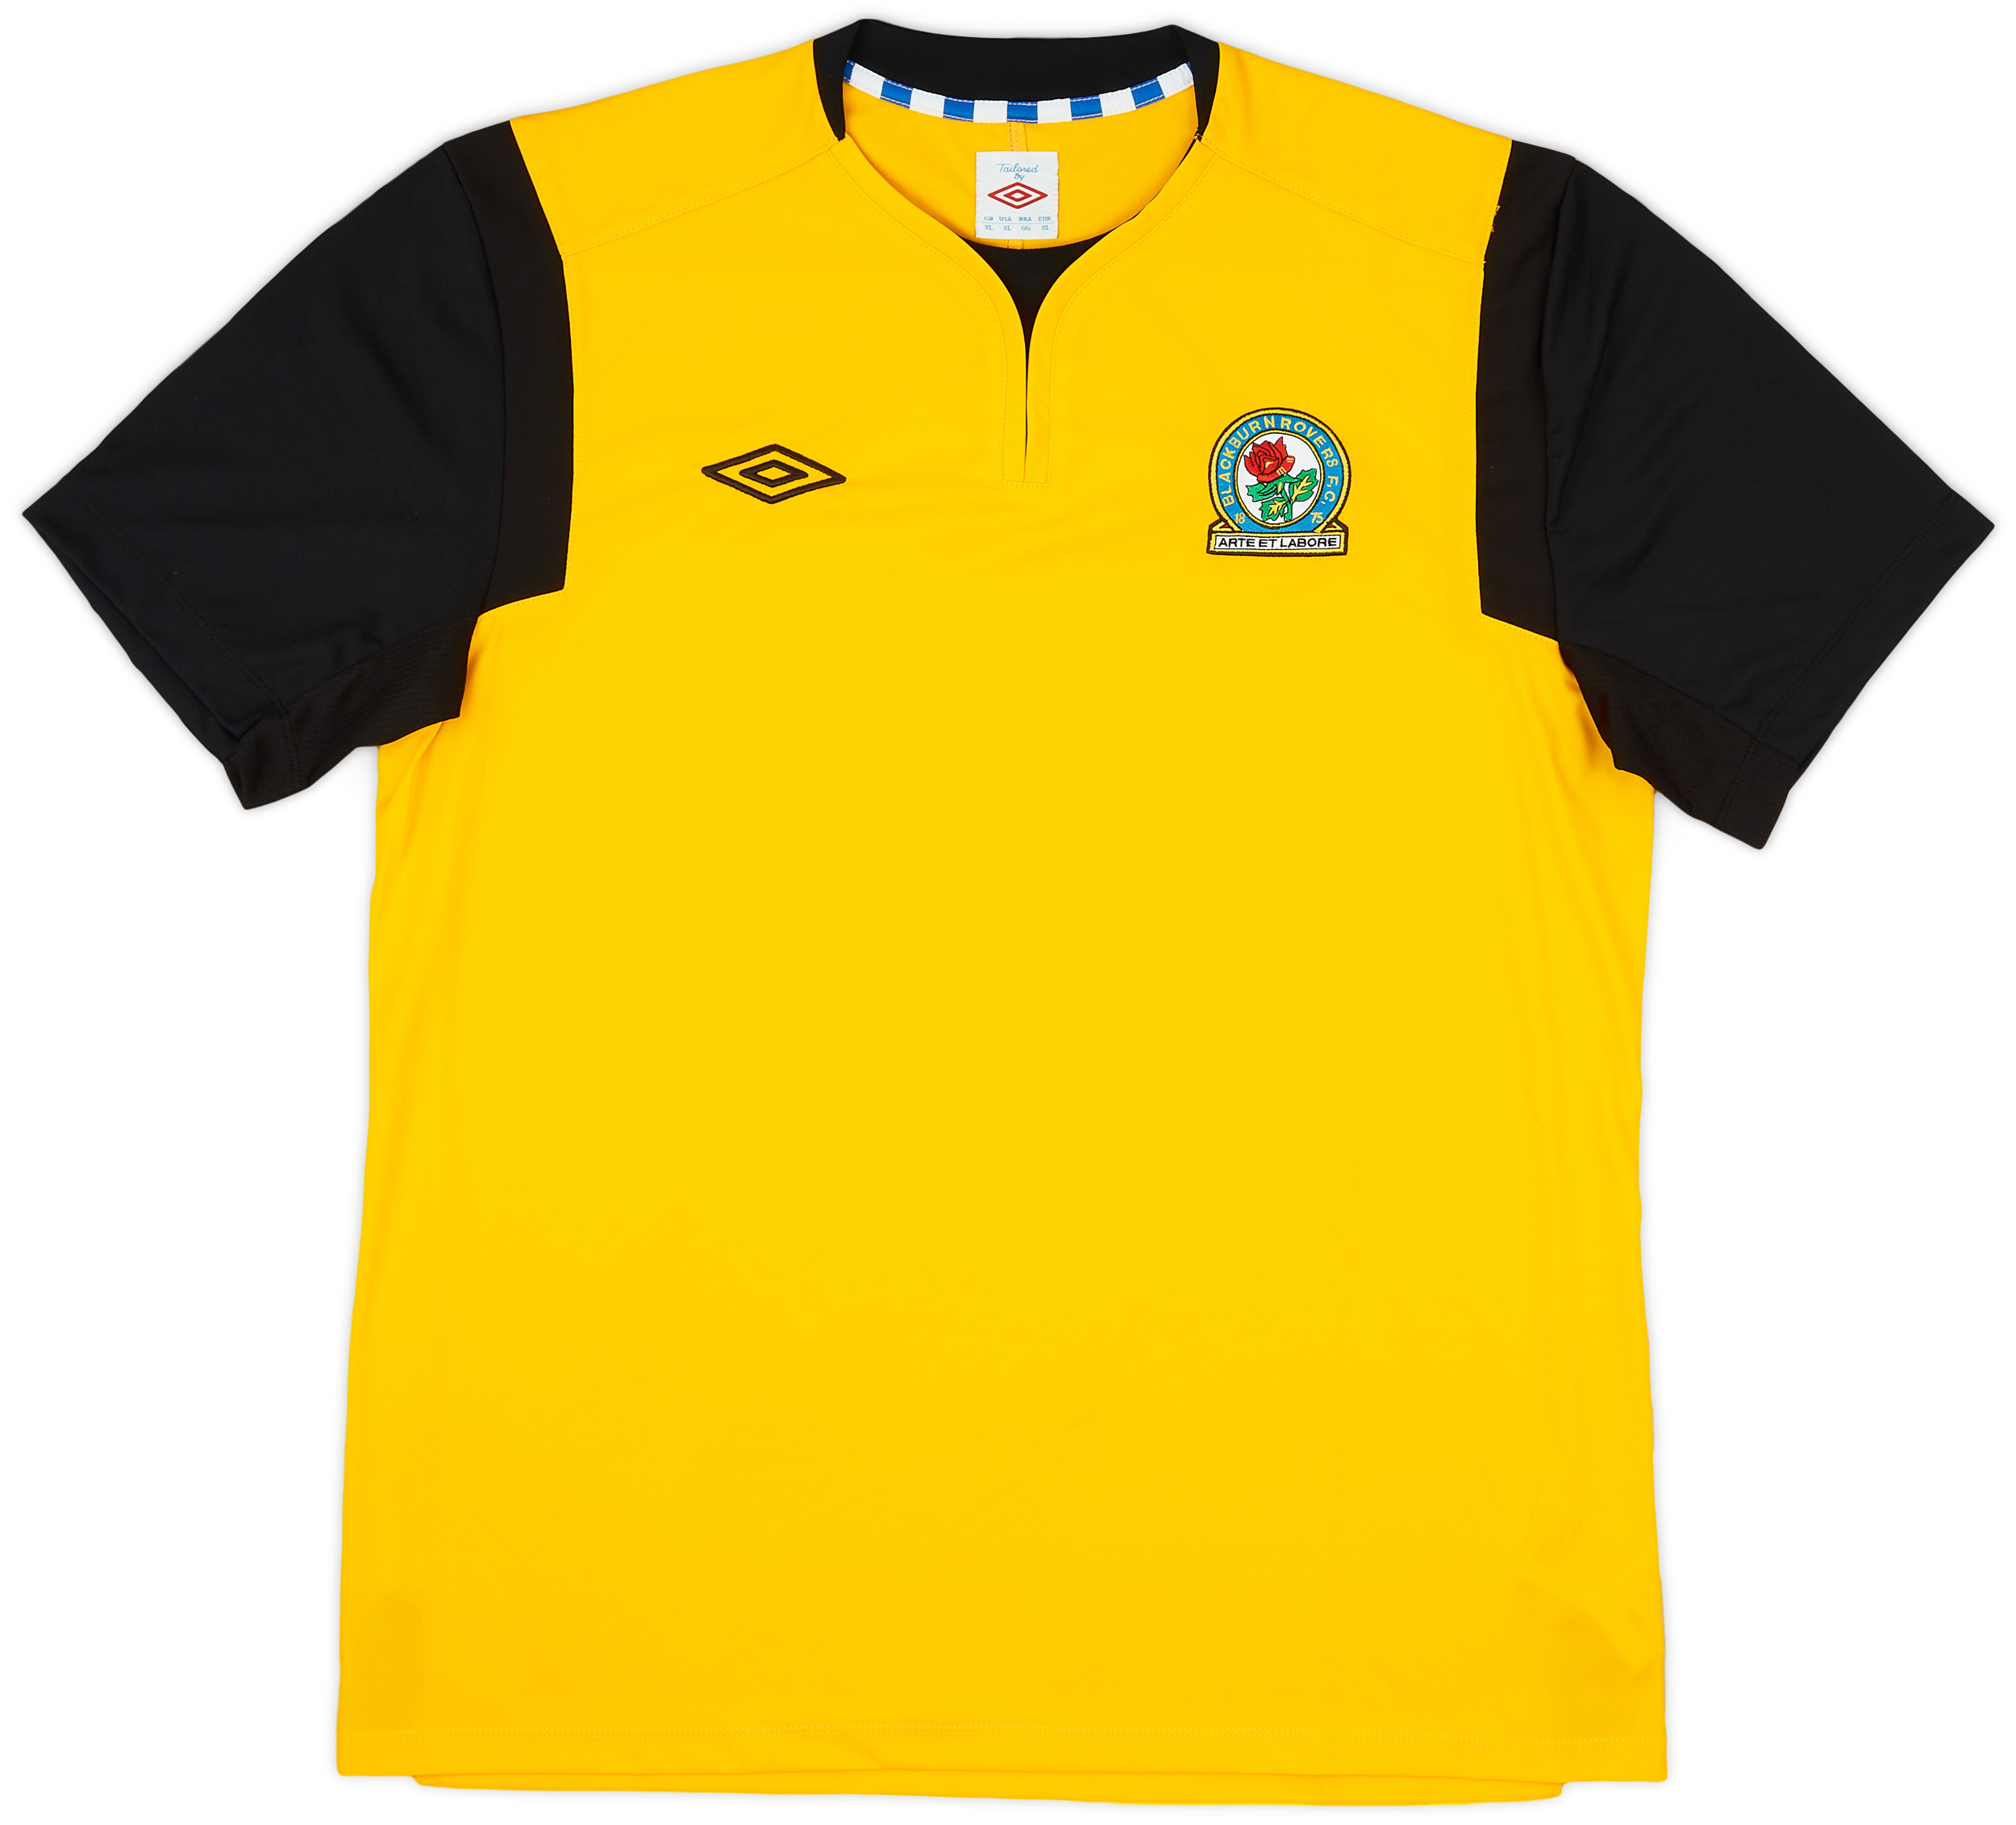 2011-12 Blackburn Rovers Away Shirt - 9/10 - ()